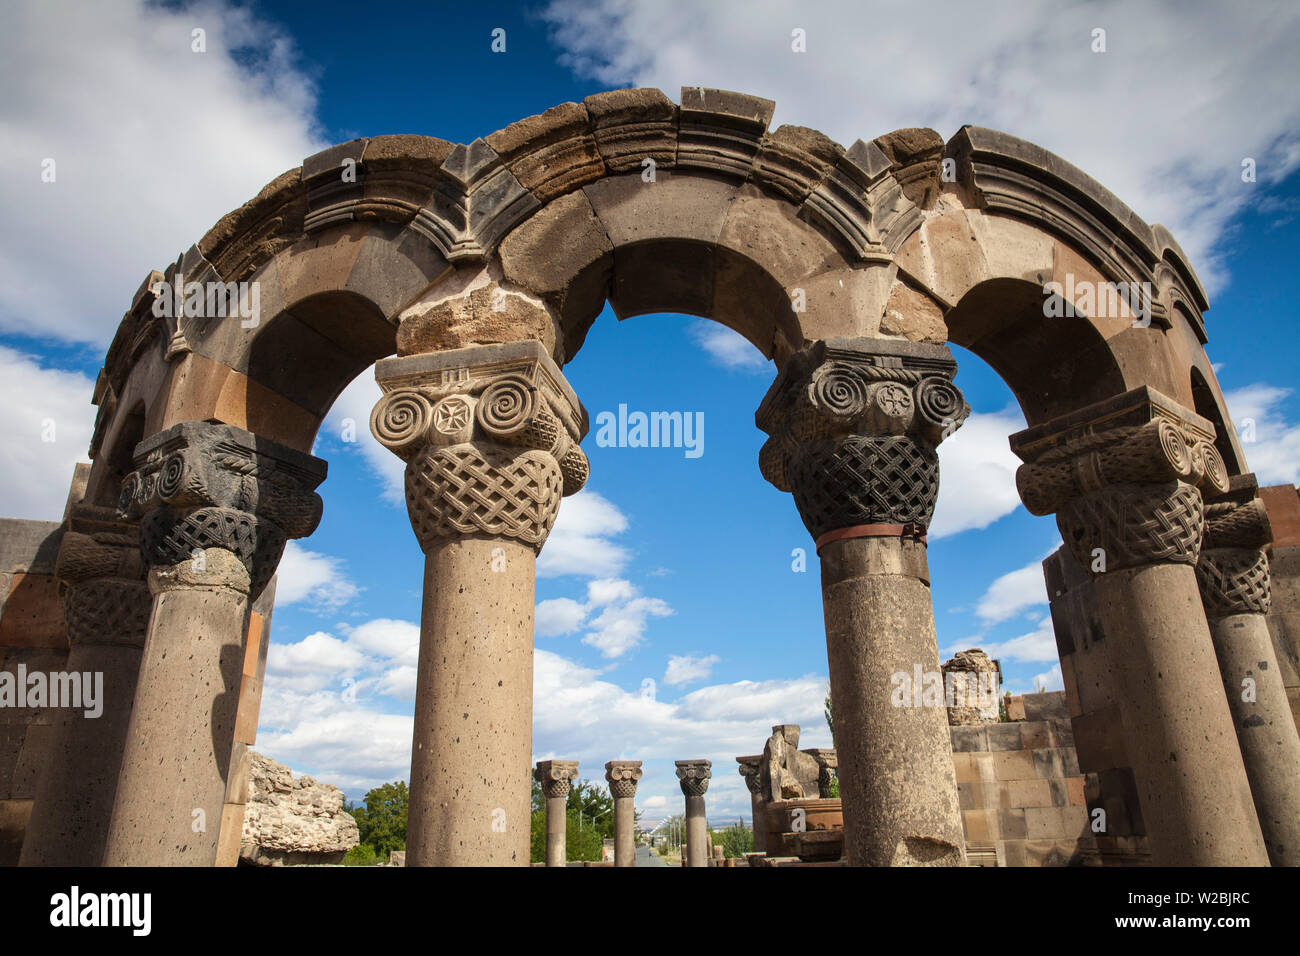 Armenia, Yerevan, Zvartnots Cathedral Stock Photo